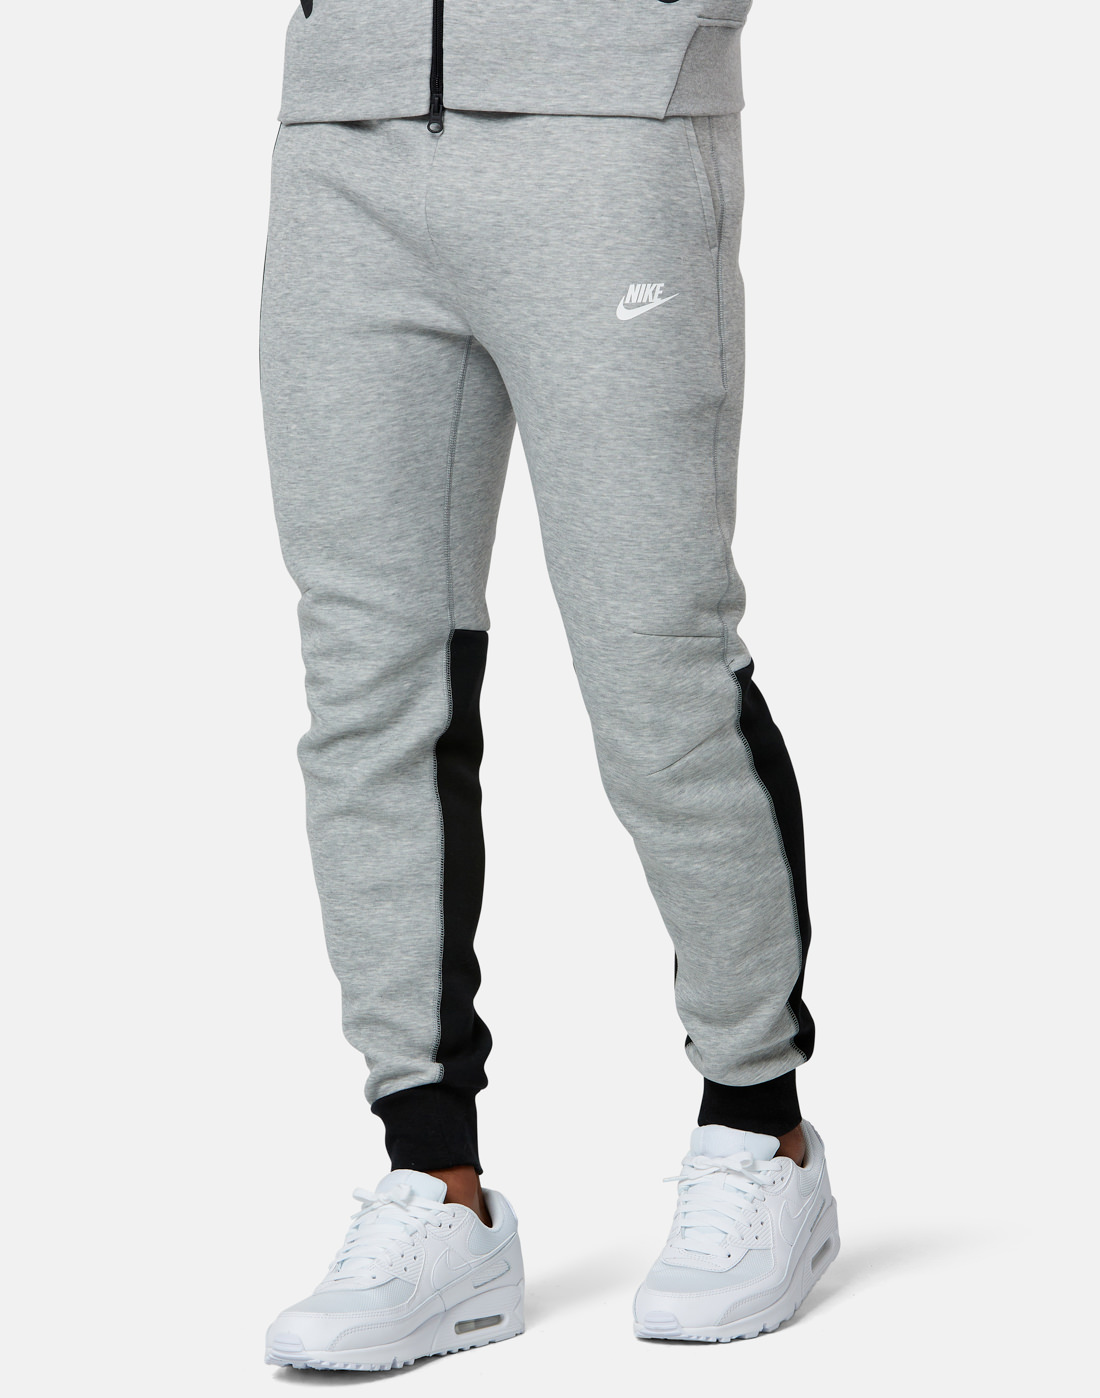 Nike Mens Tech Fleece Pants - Grey | Life Style Sports UK